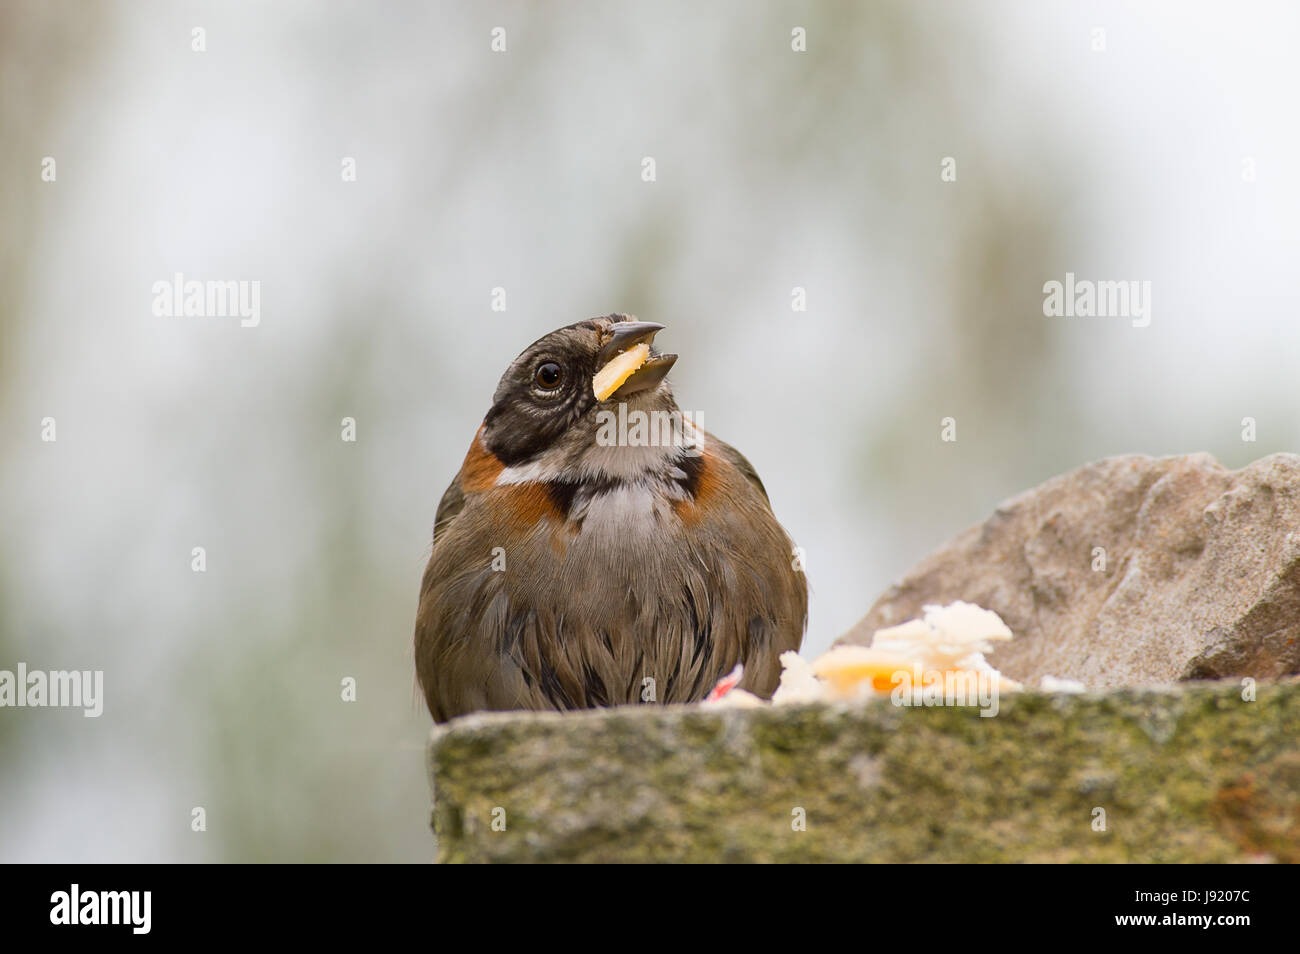 bird eating on the stones Stock Photo